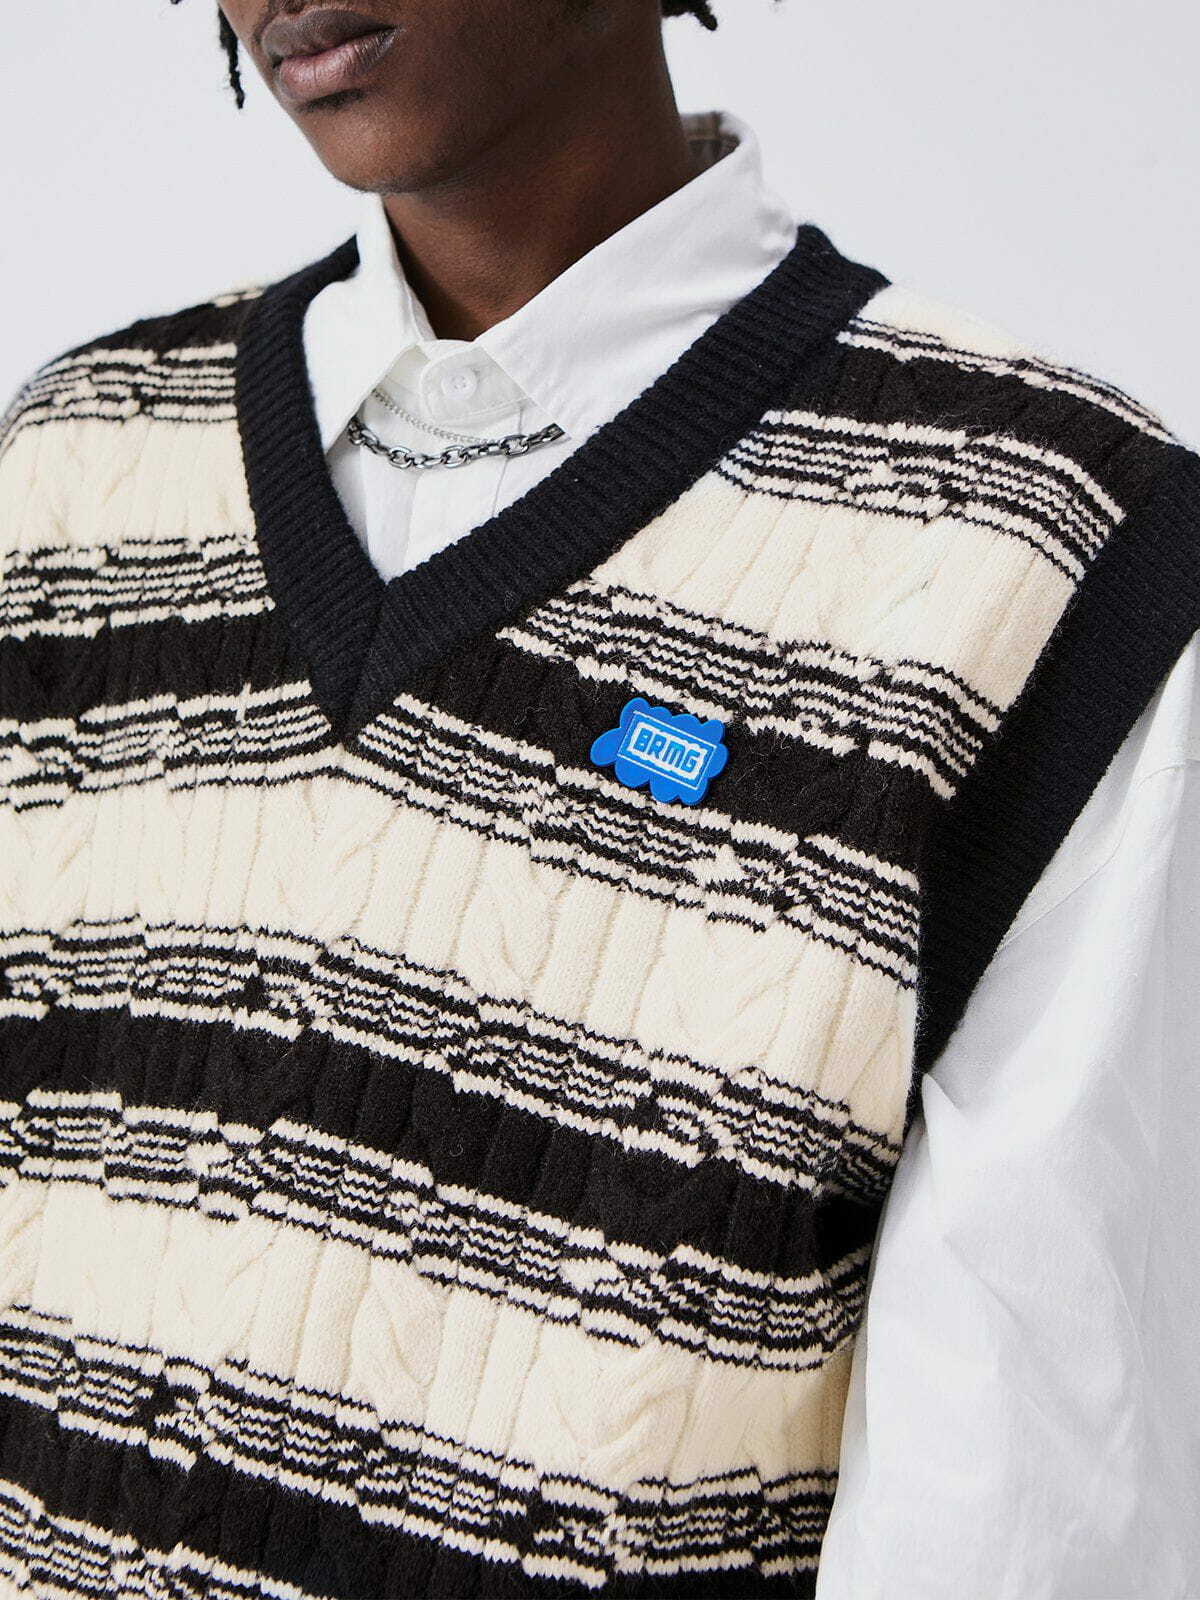 colorblock stripe sweater vest edgy retro statement piece 6867